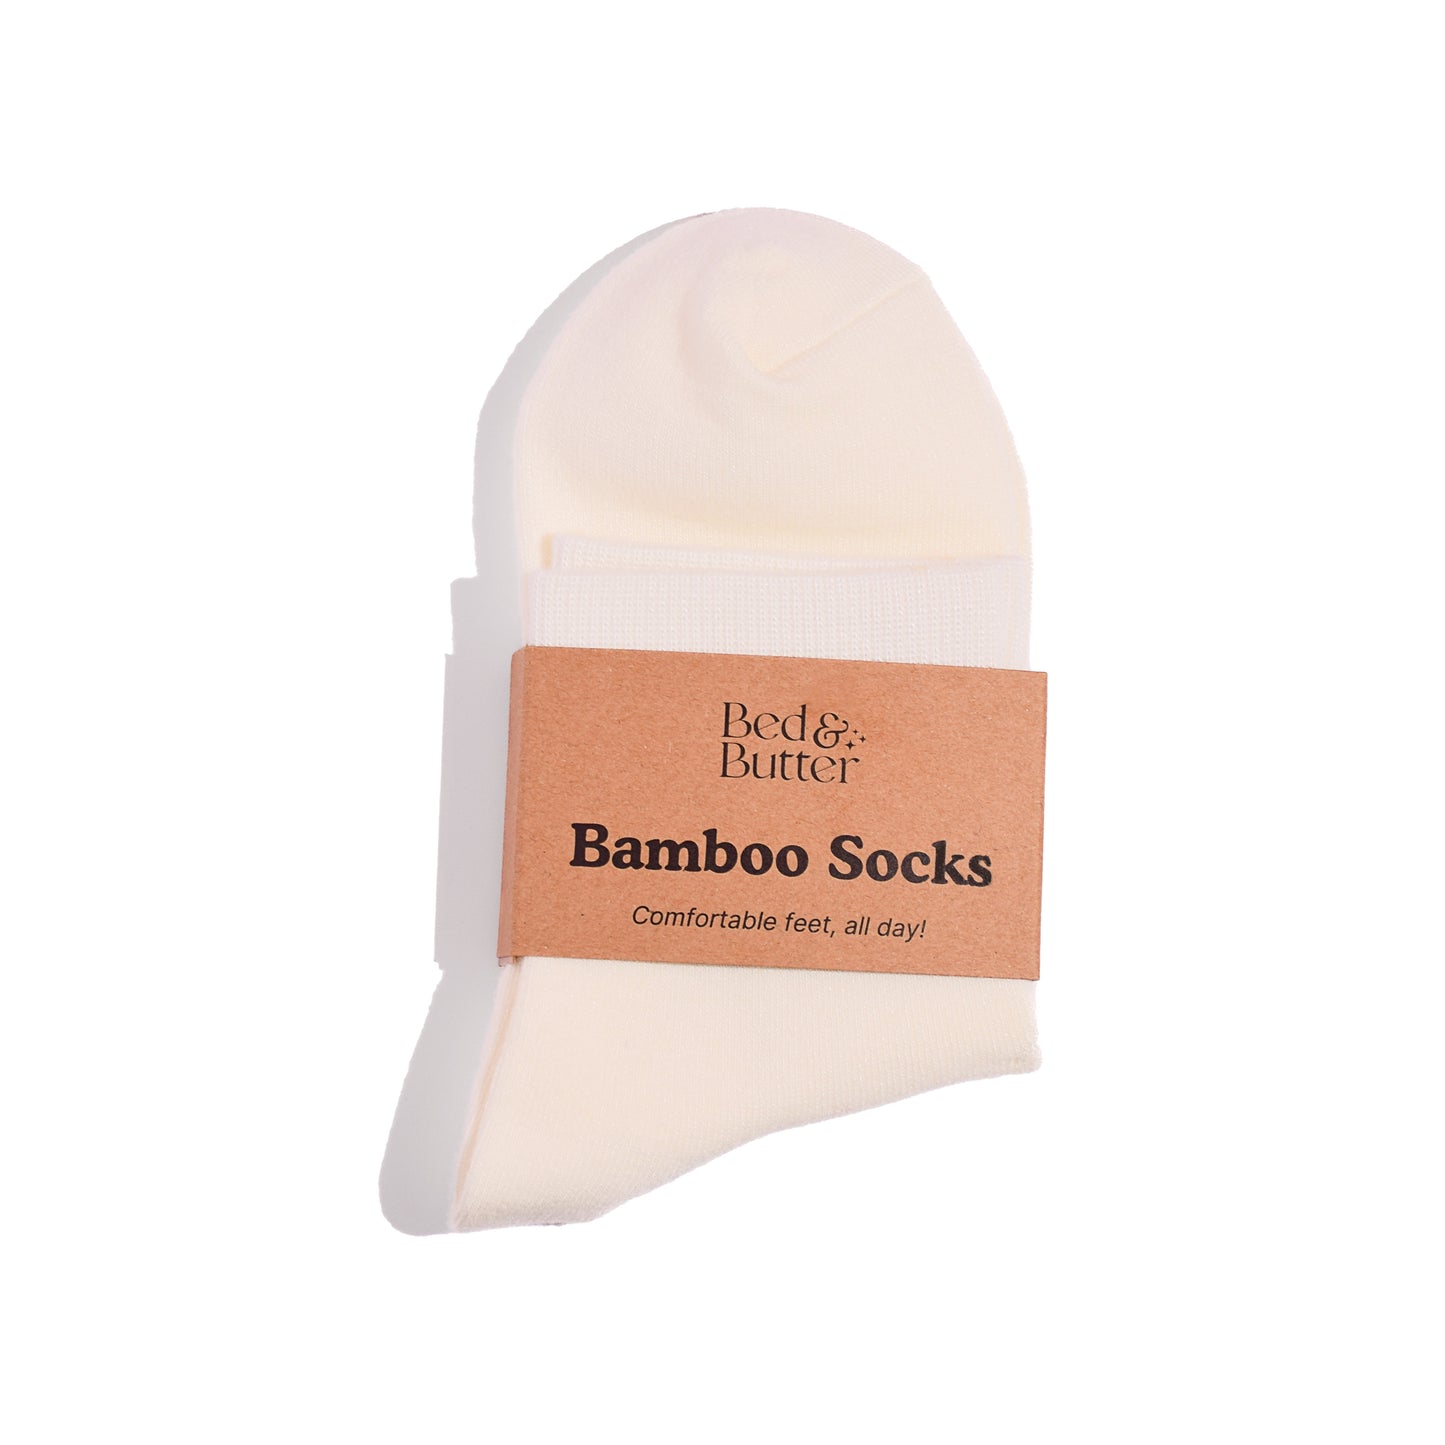 All Day Bamboo Socks